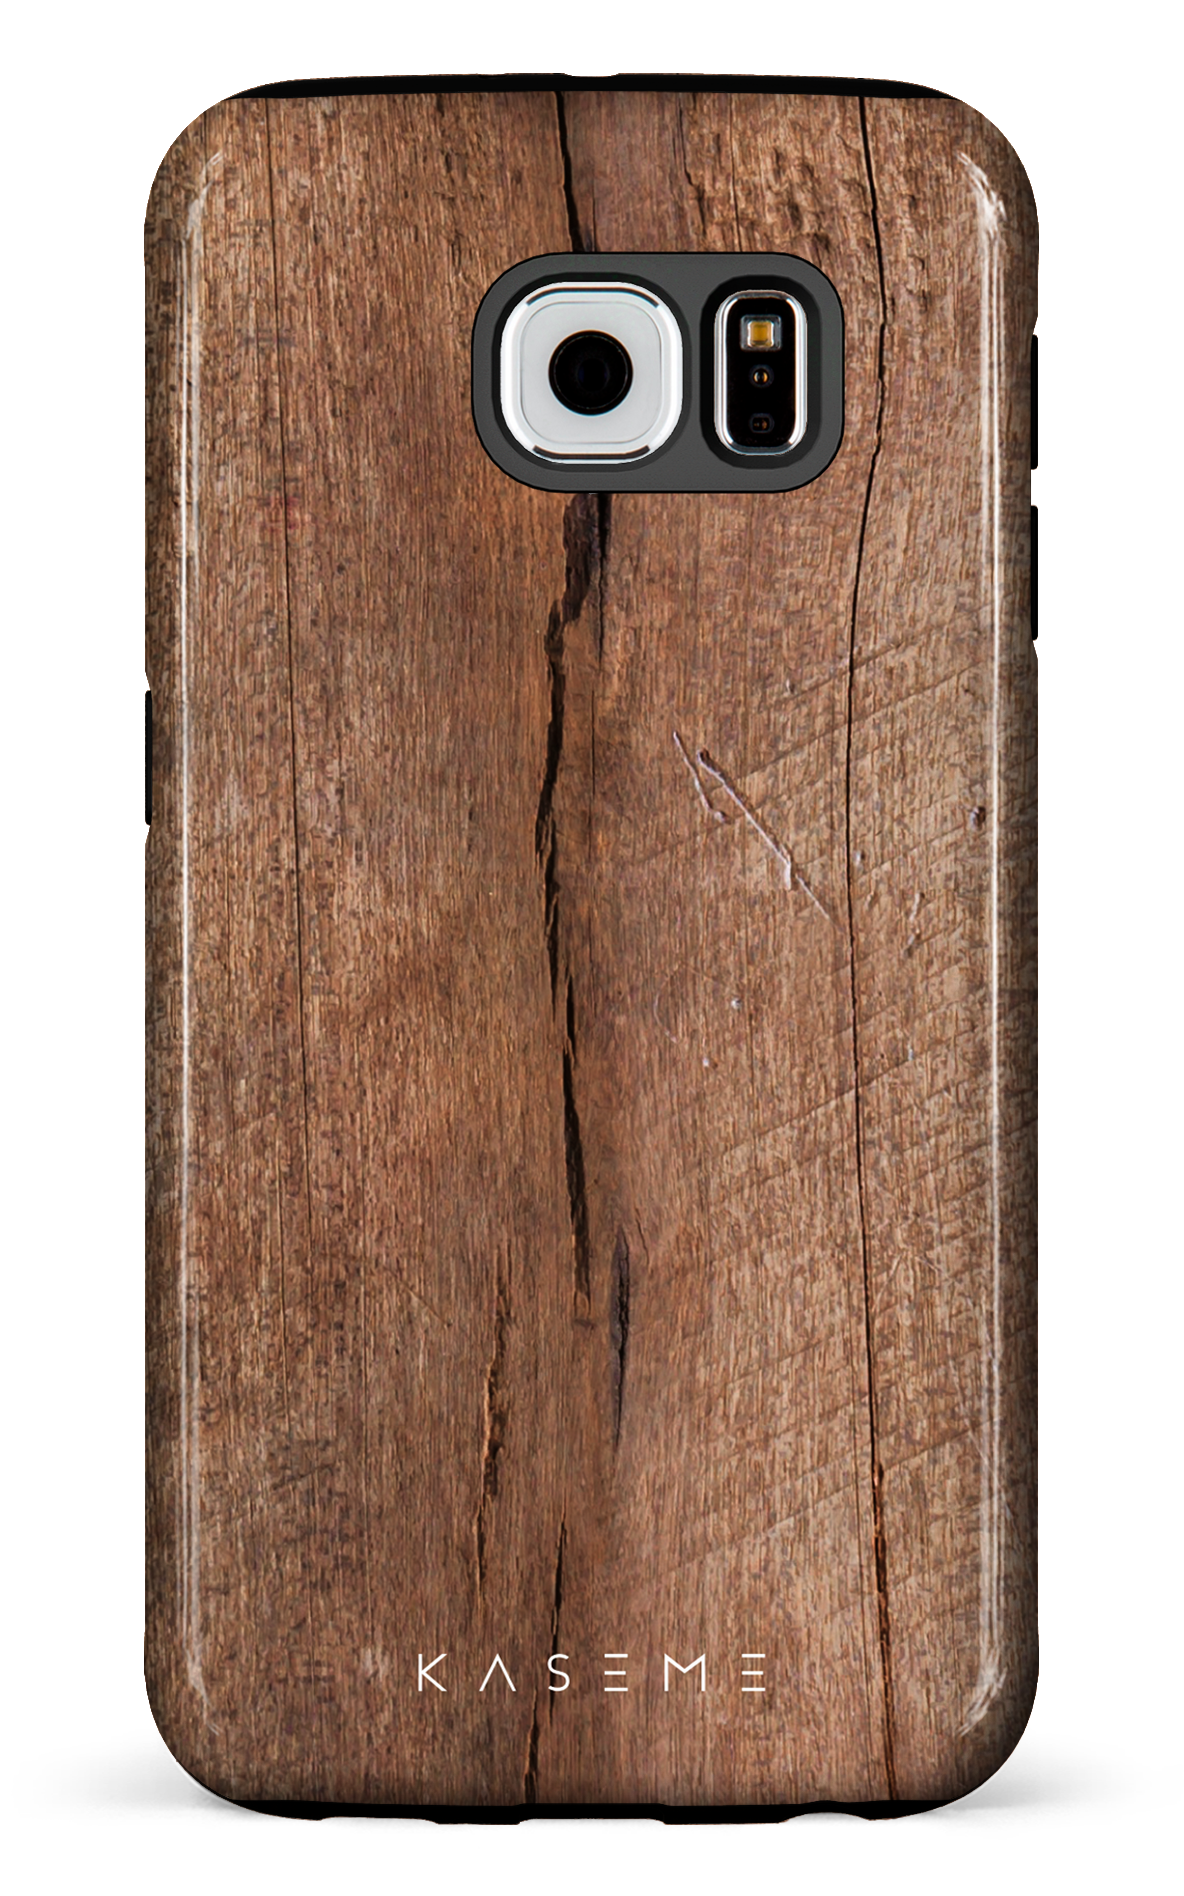 The Draveur - Galaxy S6